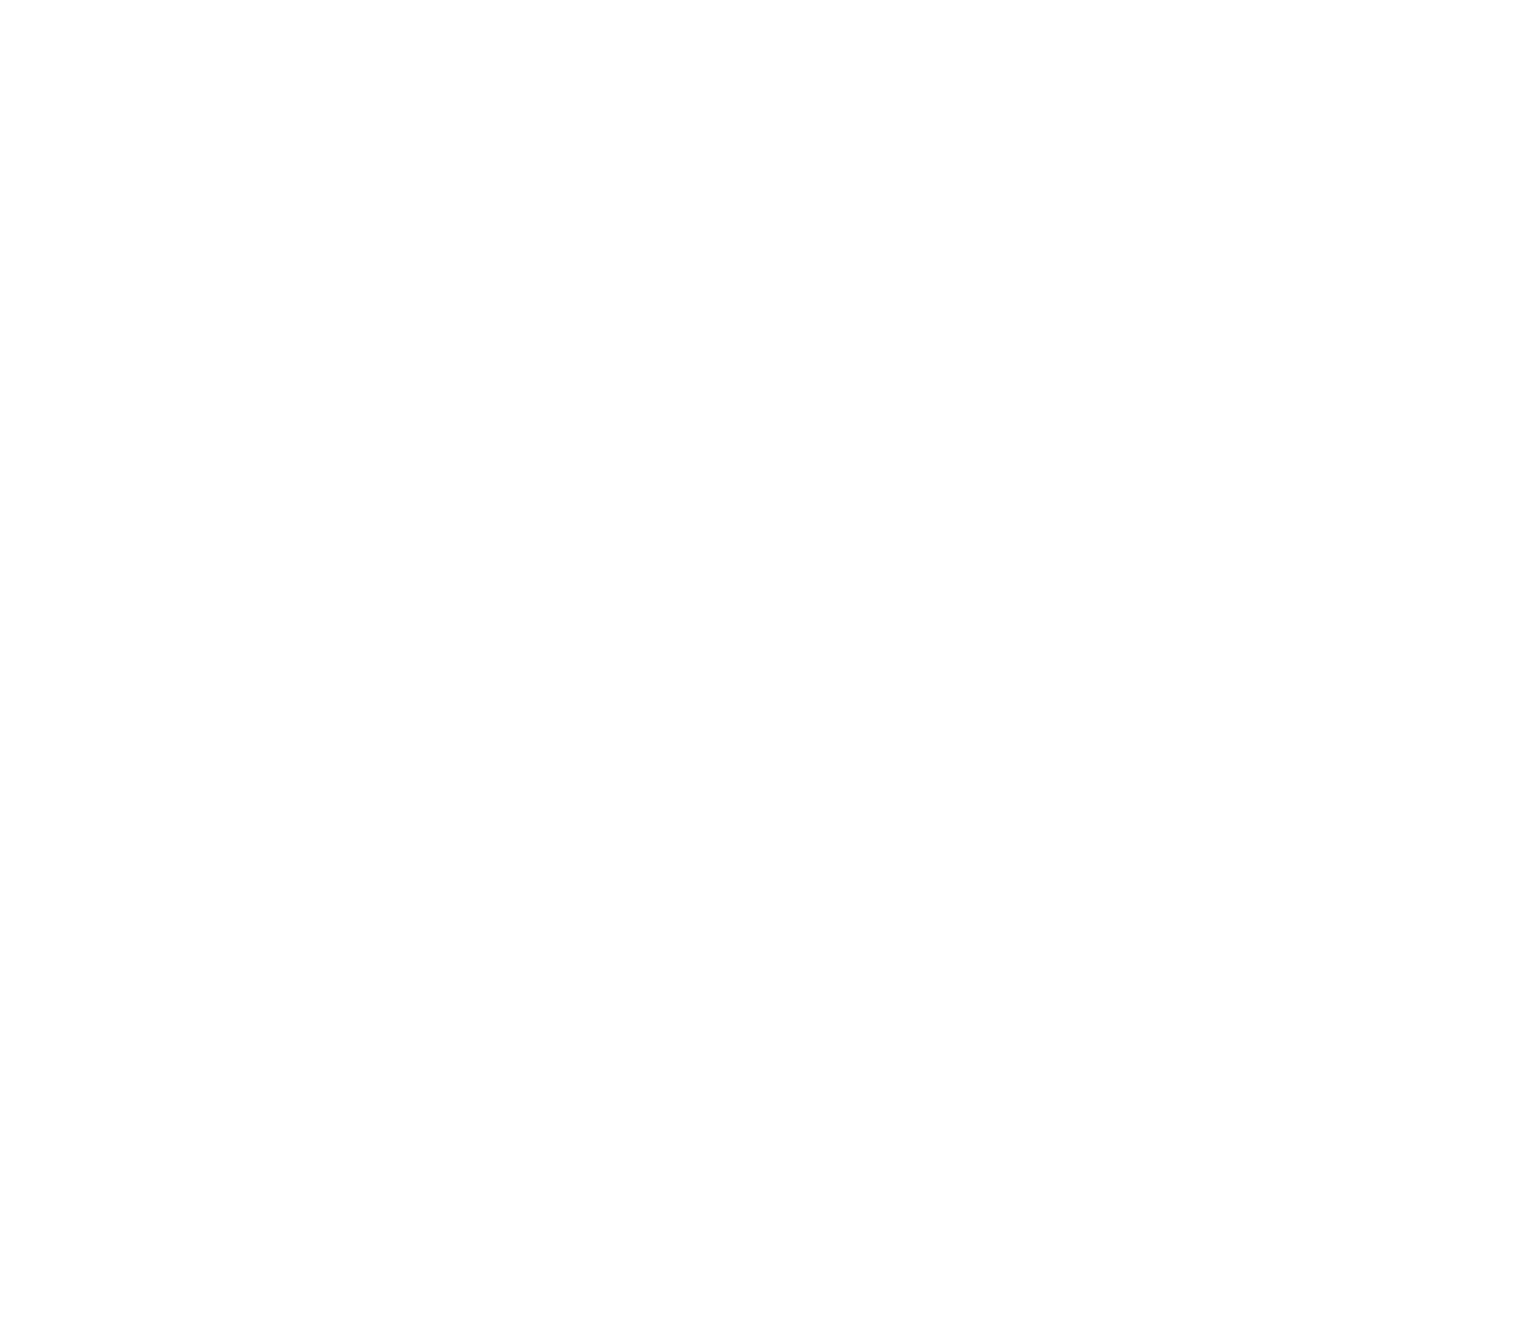 Atkore logo for dark backgrounds (transparent PNG)